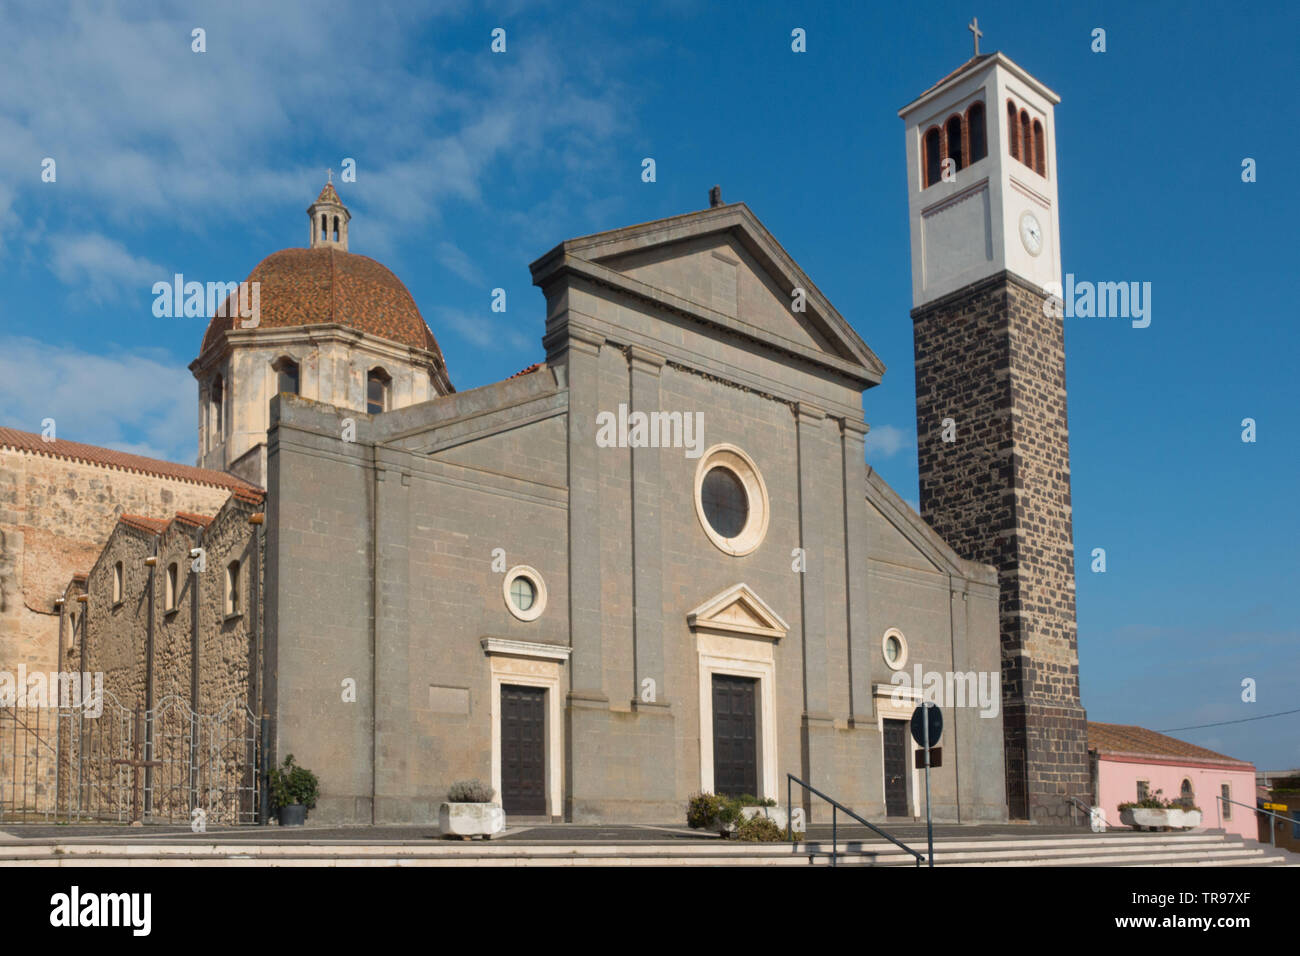 Chiesa Santa Maria Assunta, Cabras, eastern Sardinia, Italy Stock Photo